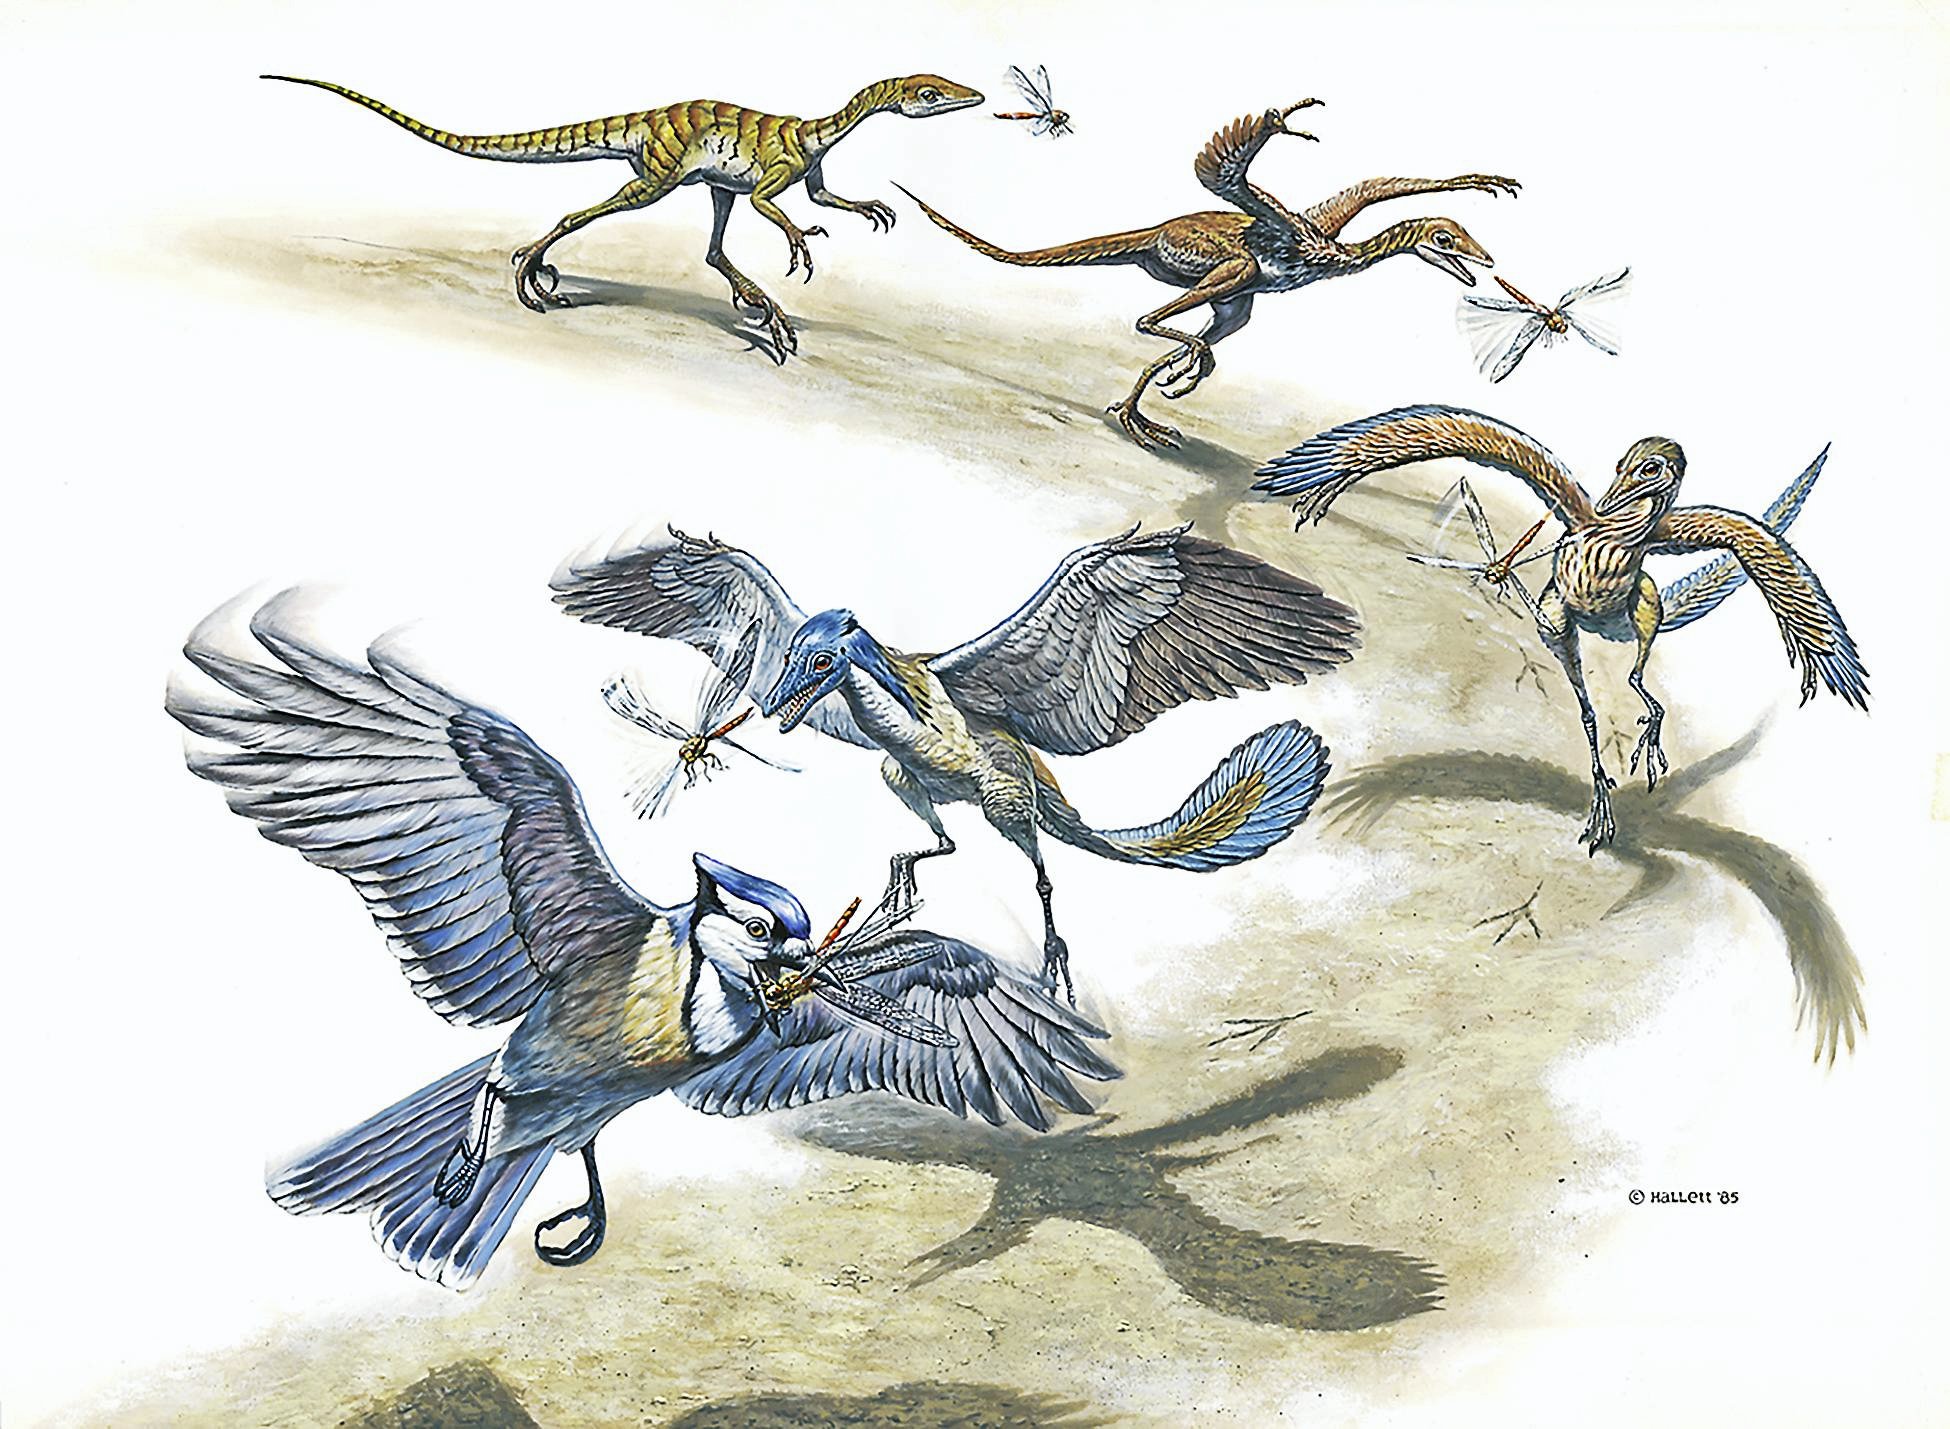 Откуда появились птицы. Археоптерикс Эволюция птиц. Потомки археоптерикса. Археоптерикс динозавр. Птицы потомки динозавров.